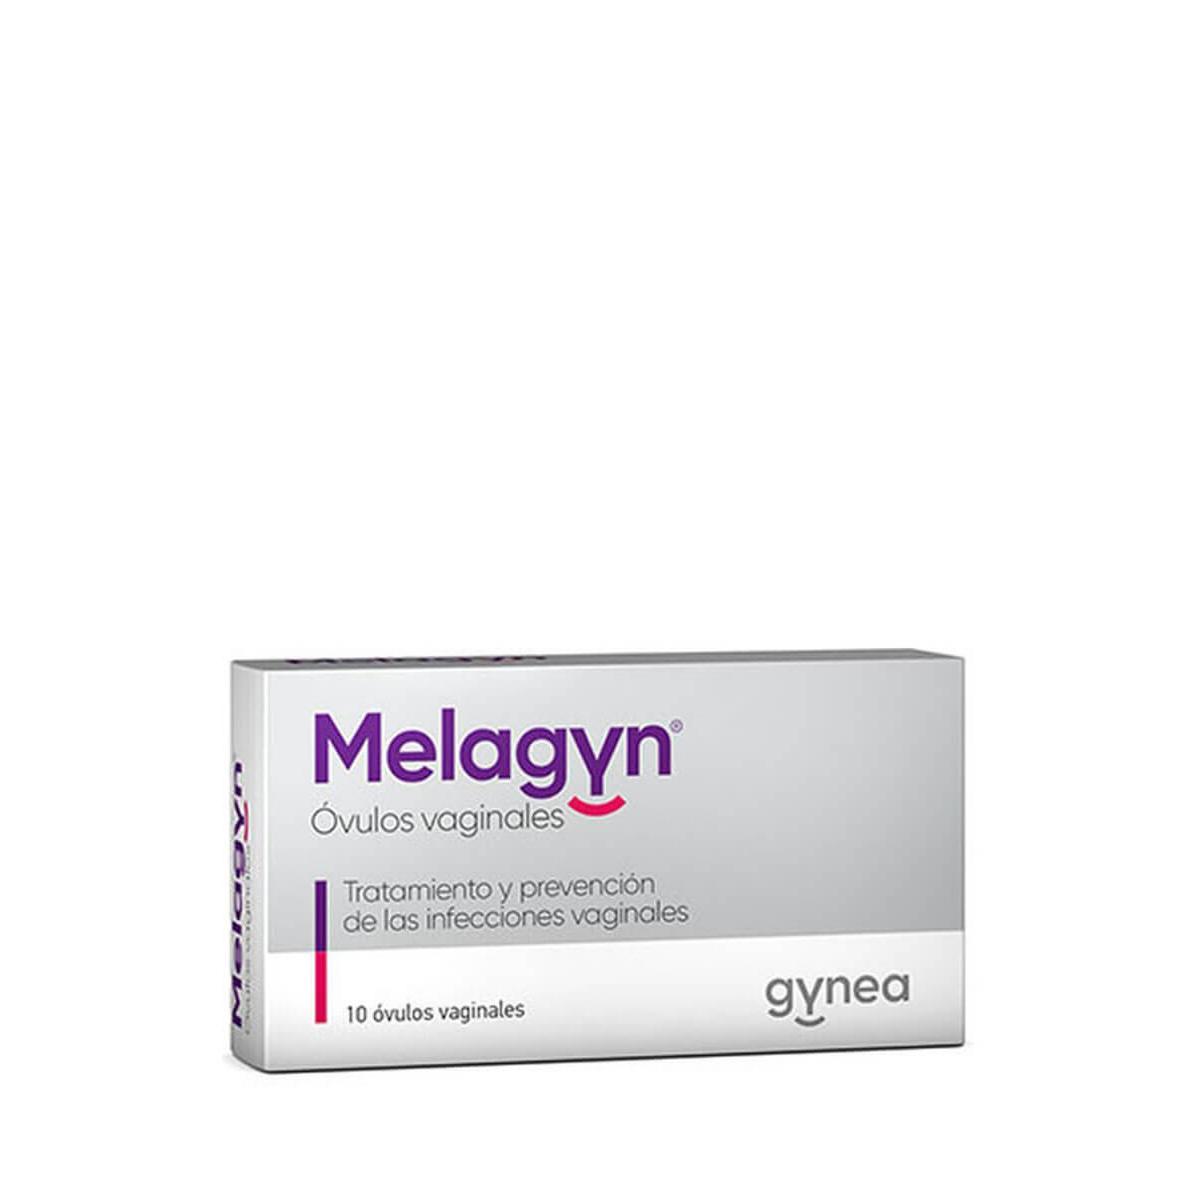 Gynea - Melagyn 10 ovulos vaginales